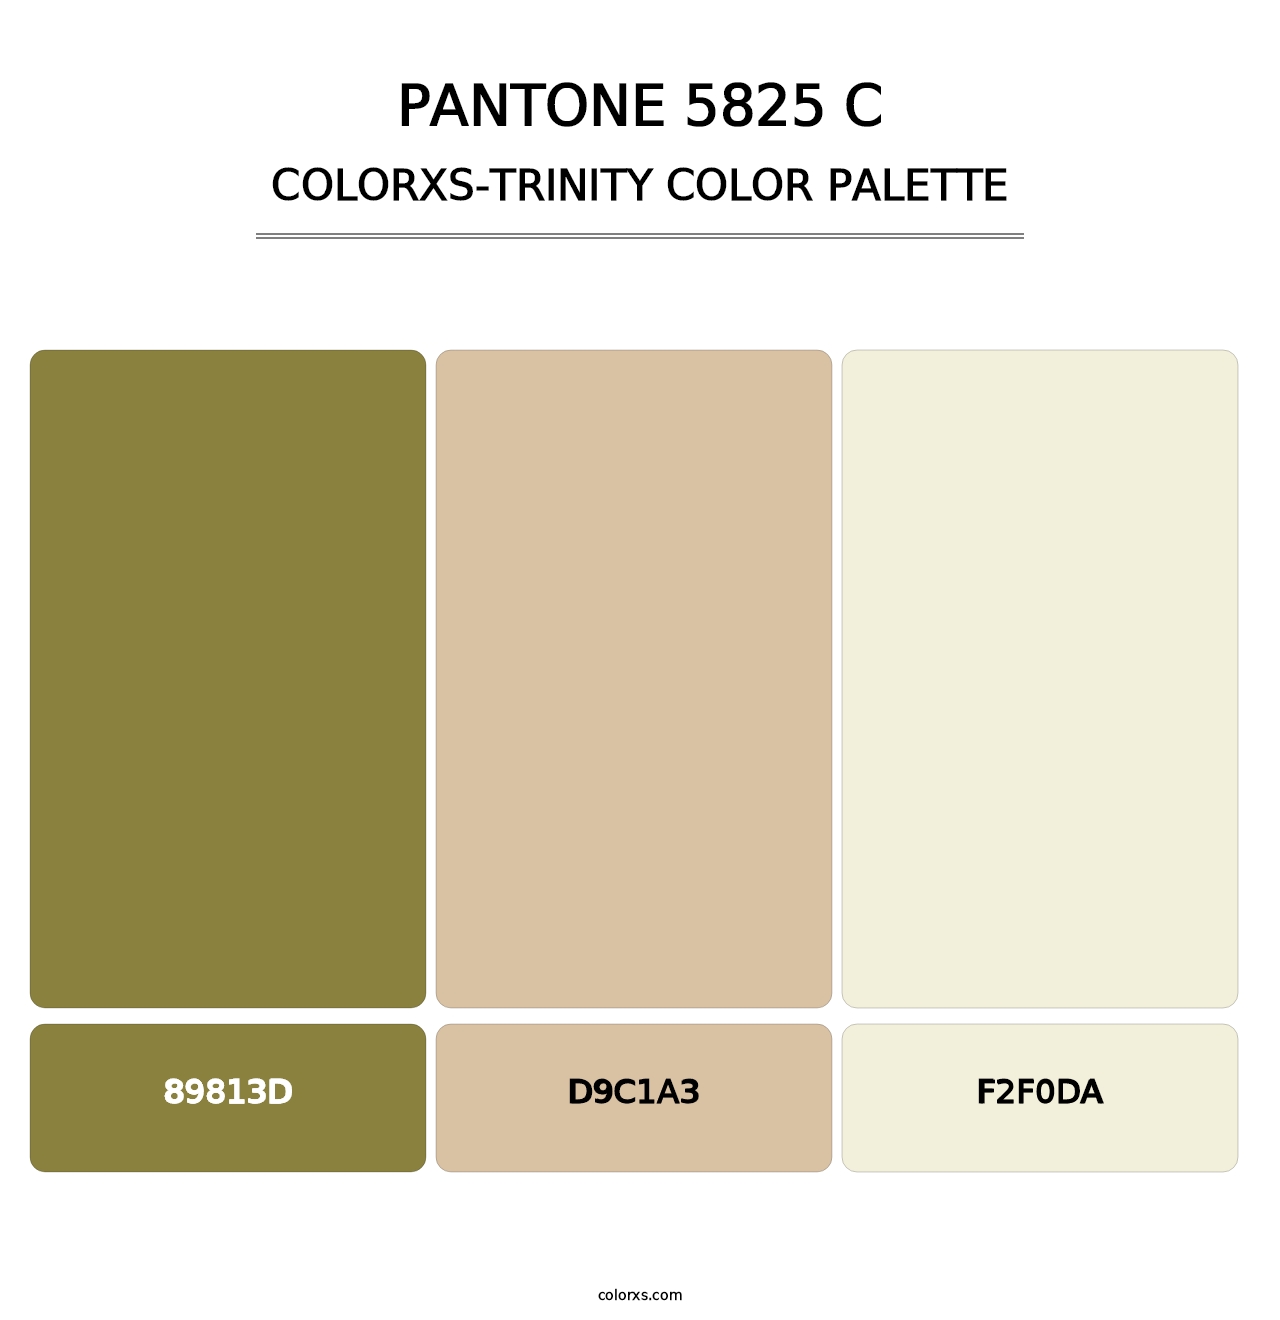 PANTONE 5825 C - Colorxs Trinity Palette